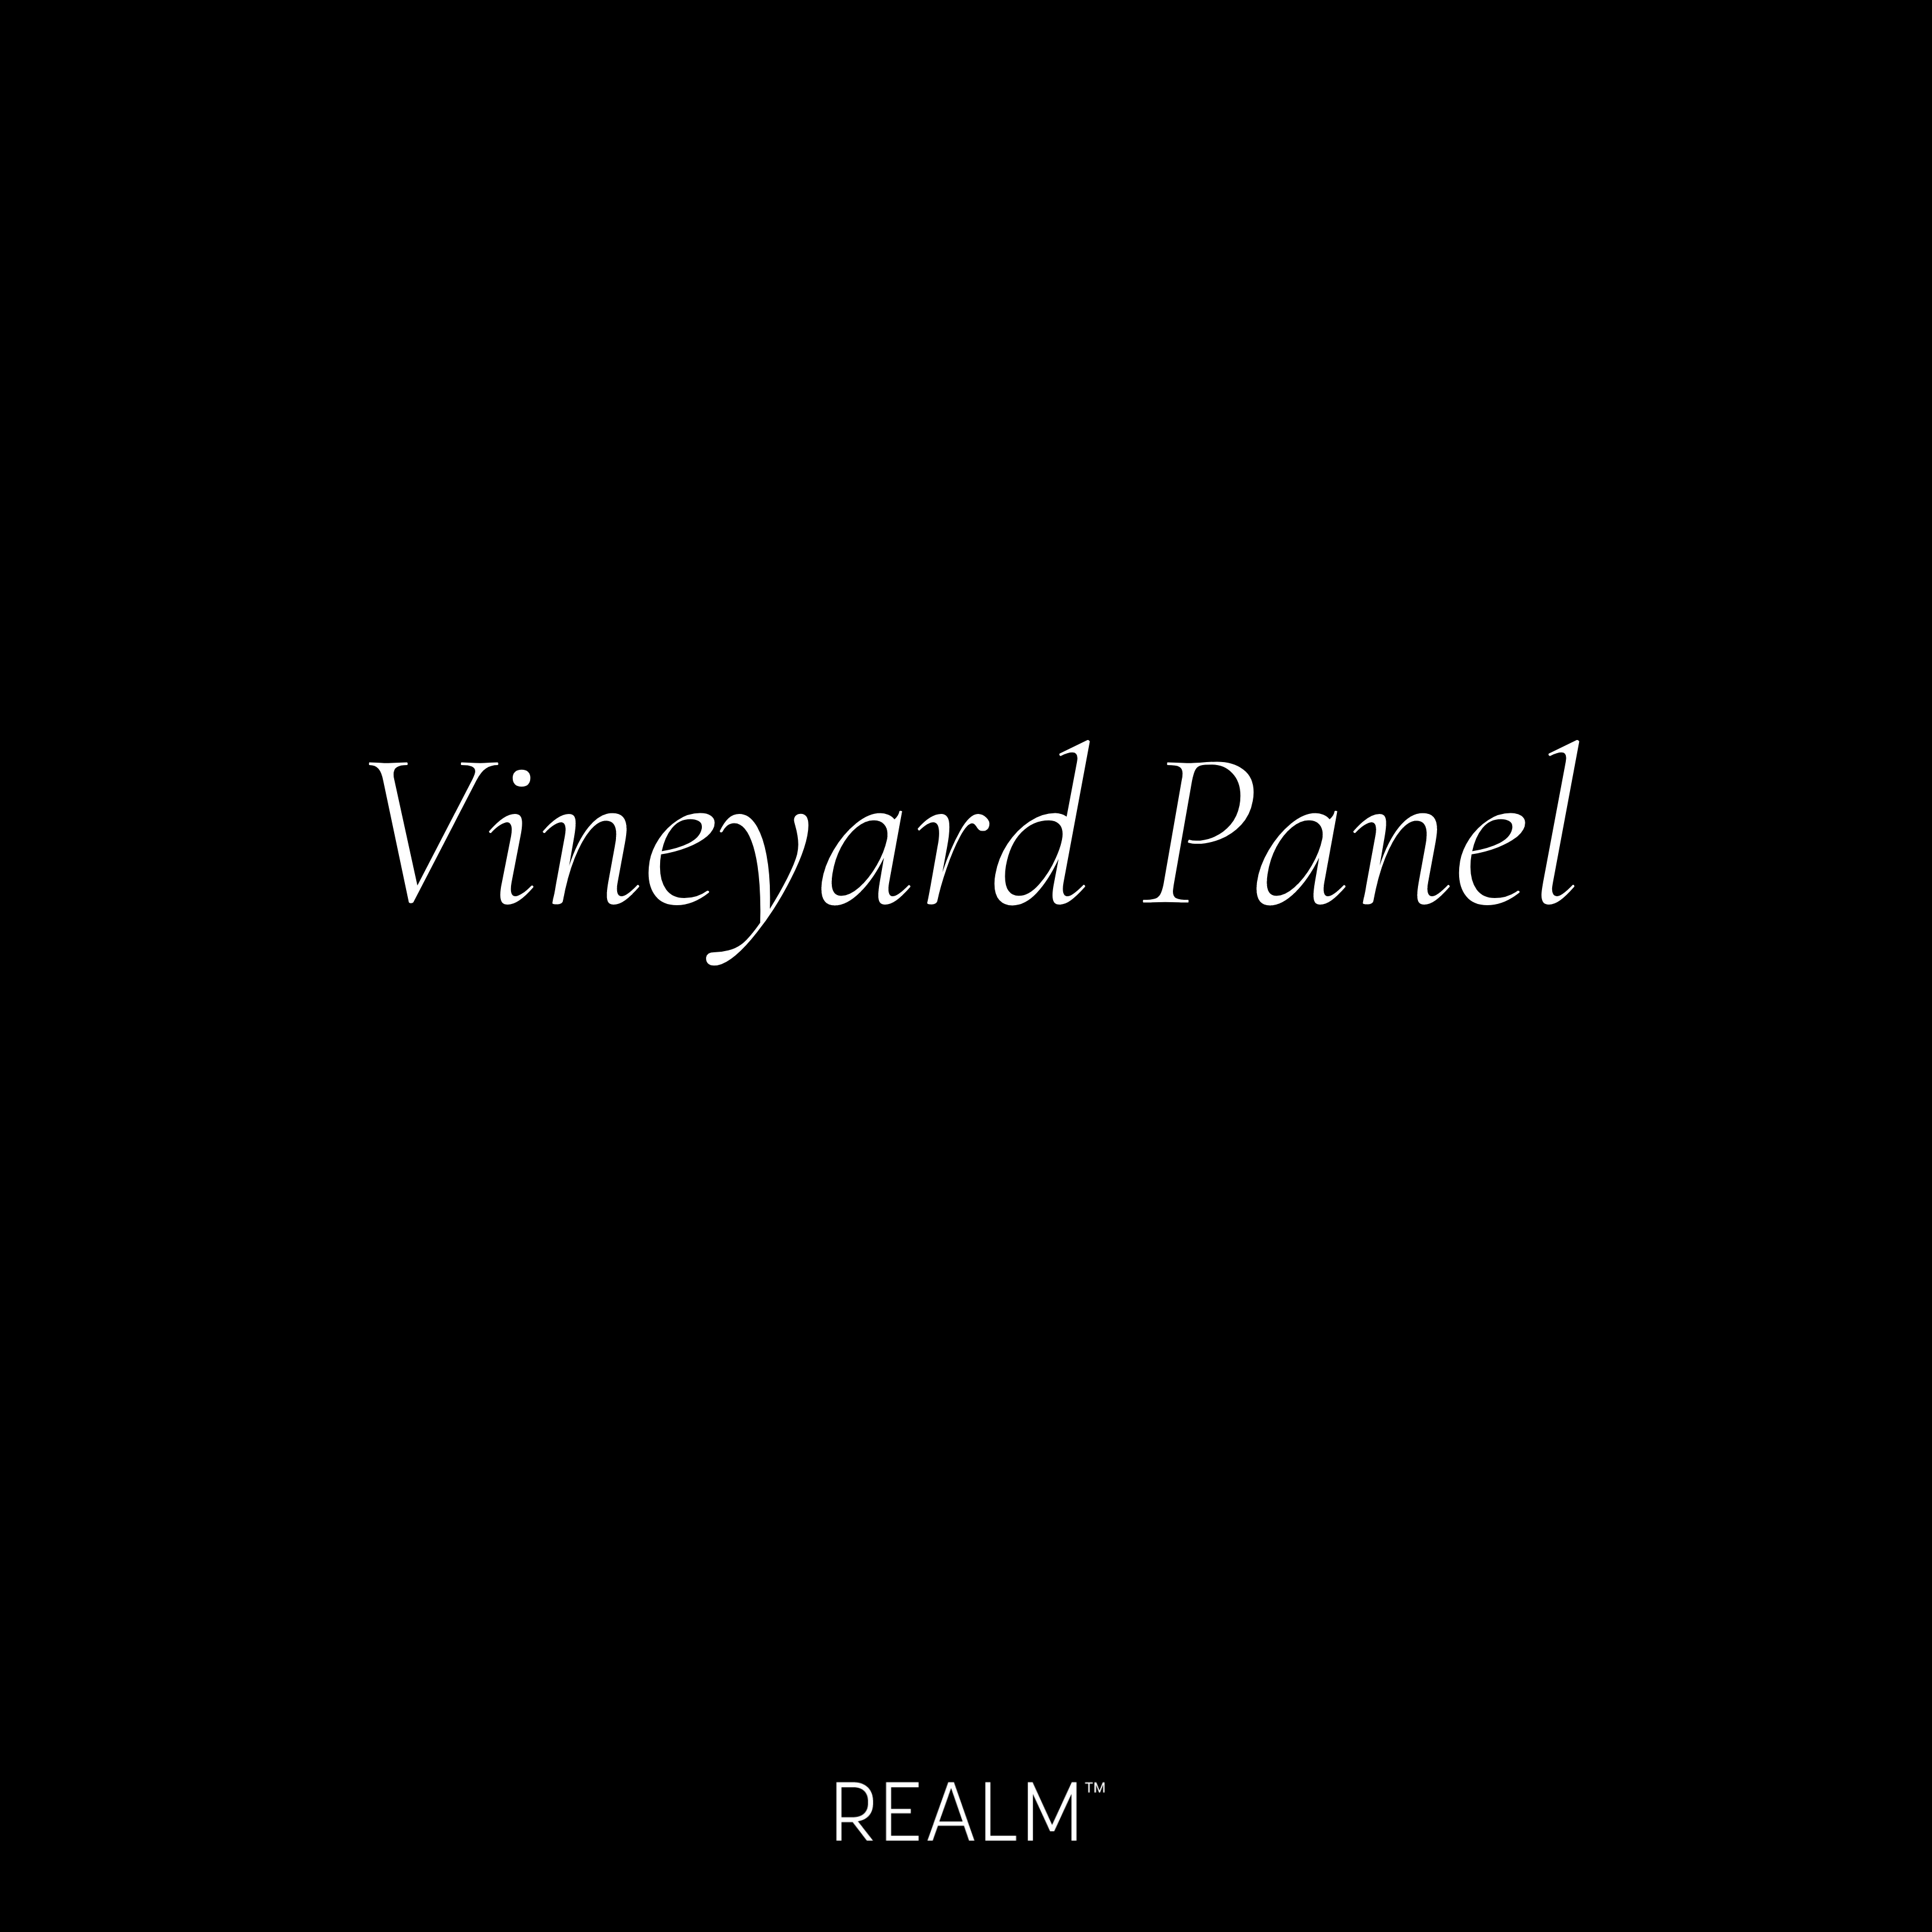 Leading Minds: Vineyard Panel